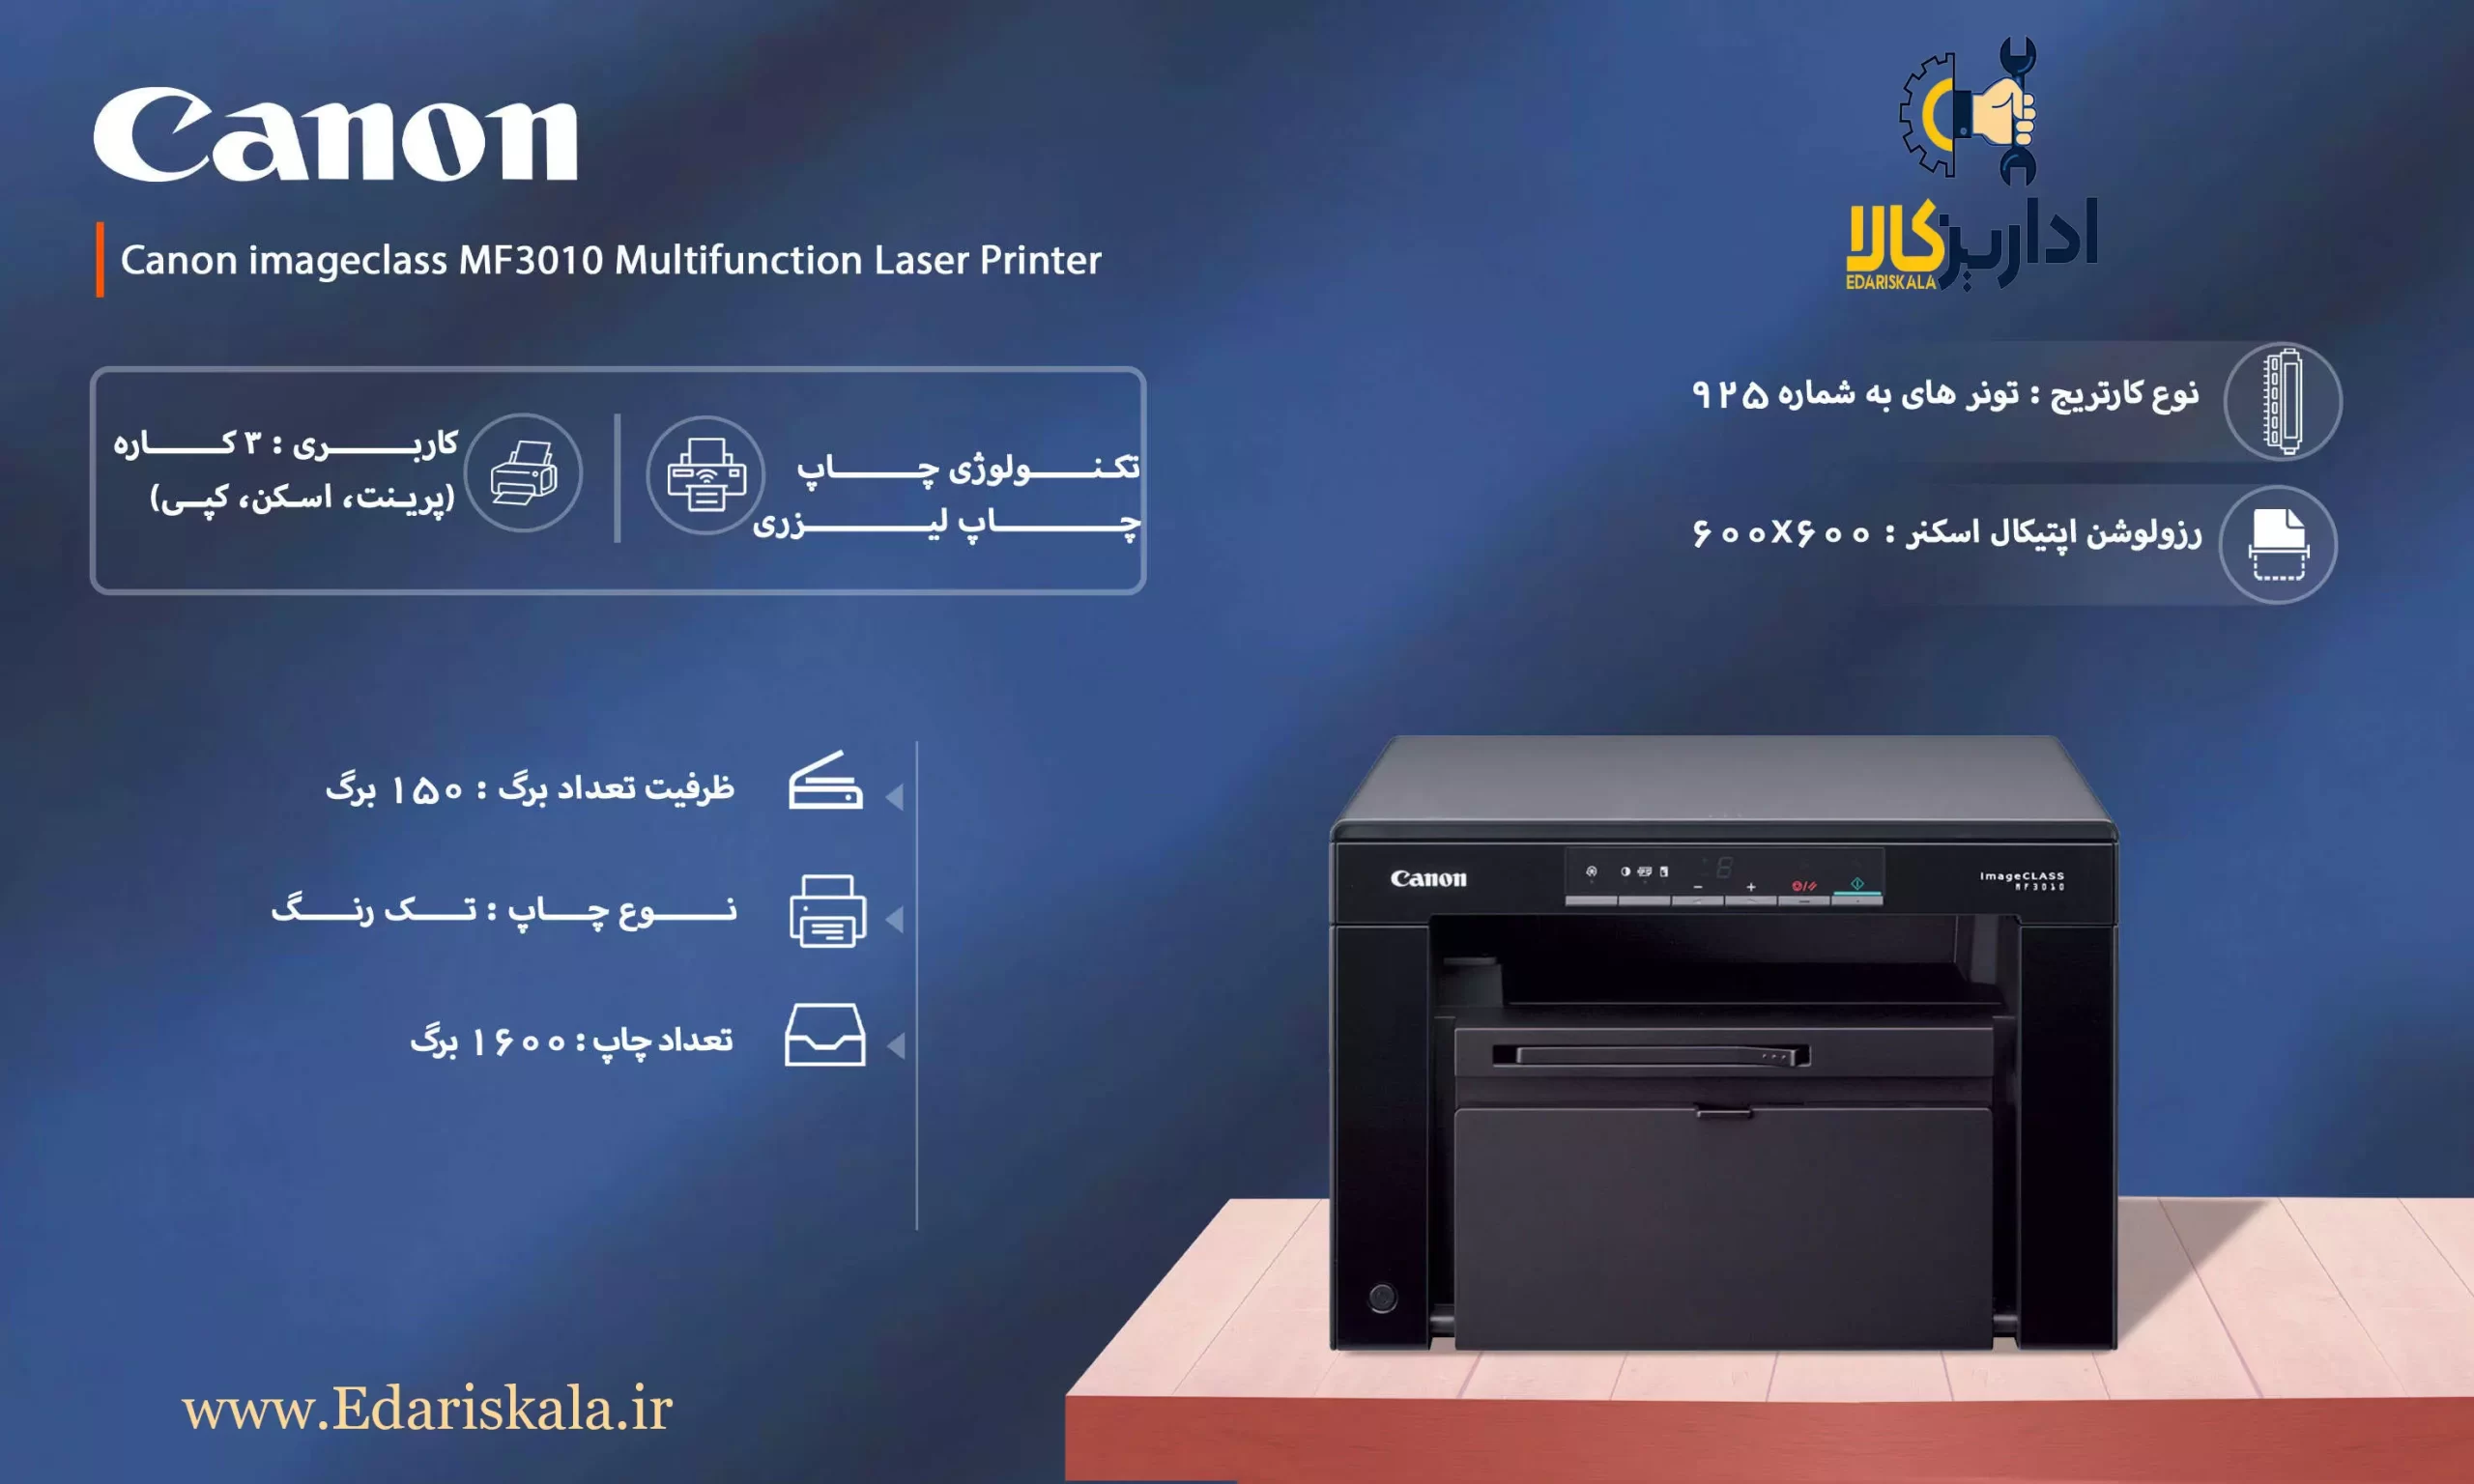 Canon imageclass MF3010 Multifunction Laser Printer